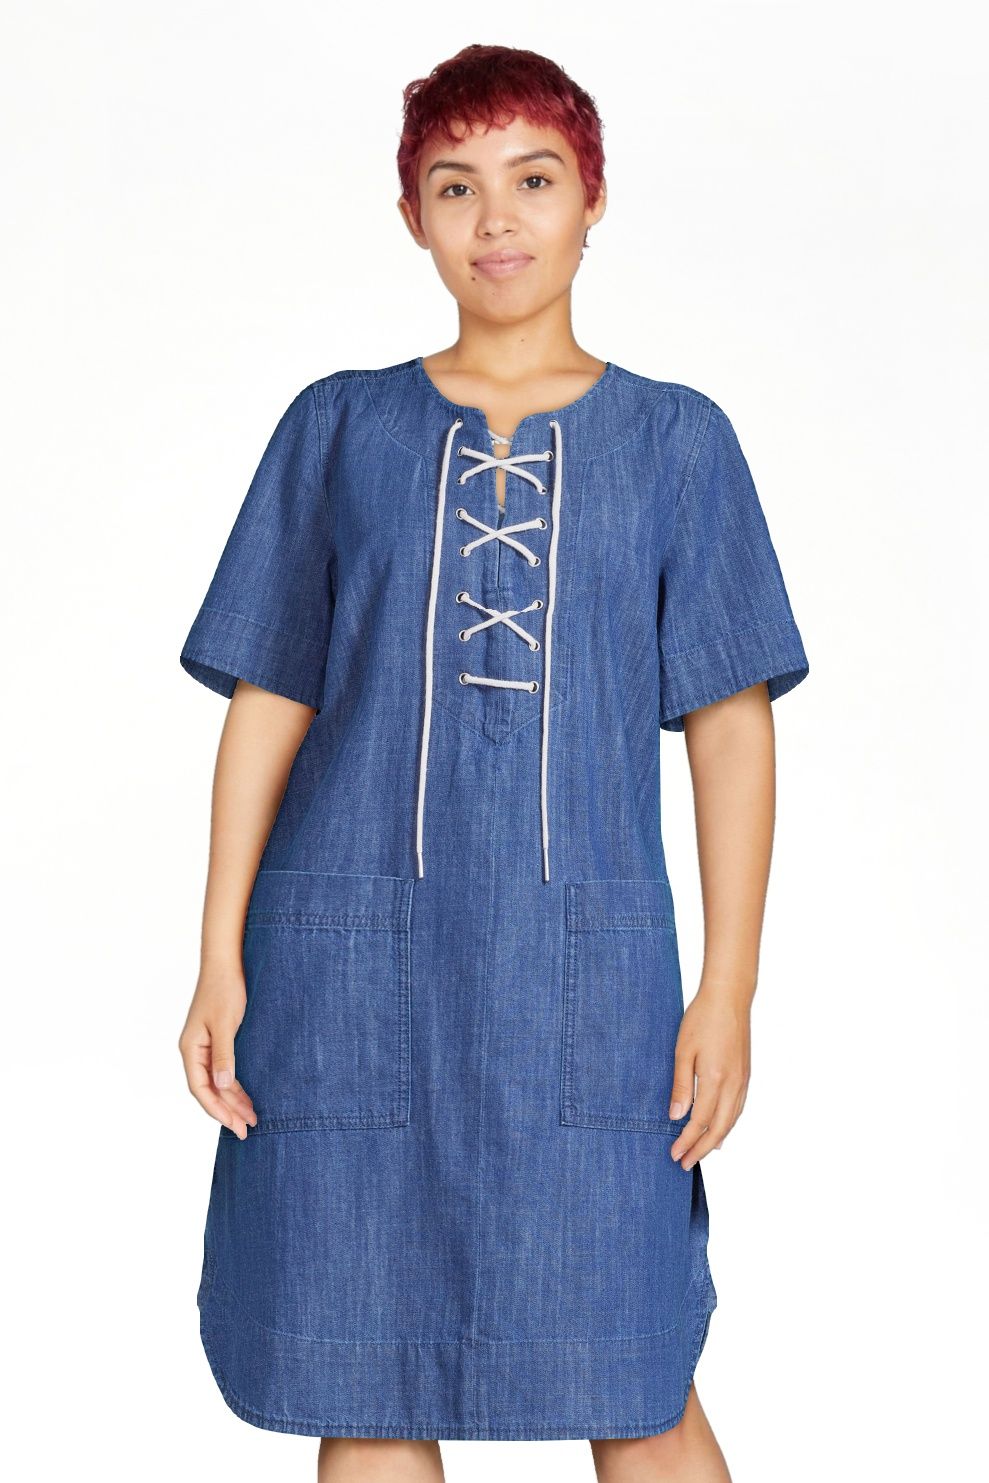 Free Assembly Women's Lace Up Mini Shift Dress with Short Sleeves, Sizes XS-XXXL | Walmart (US)